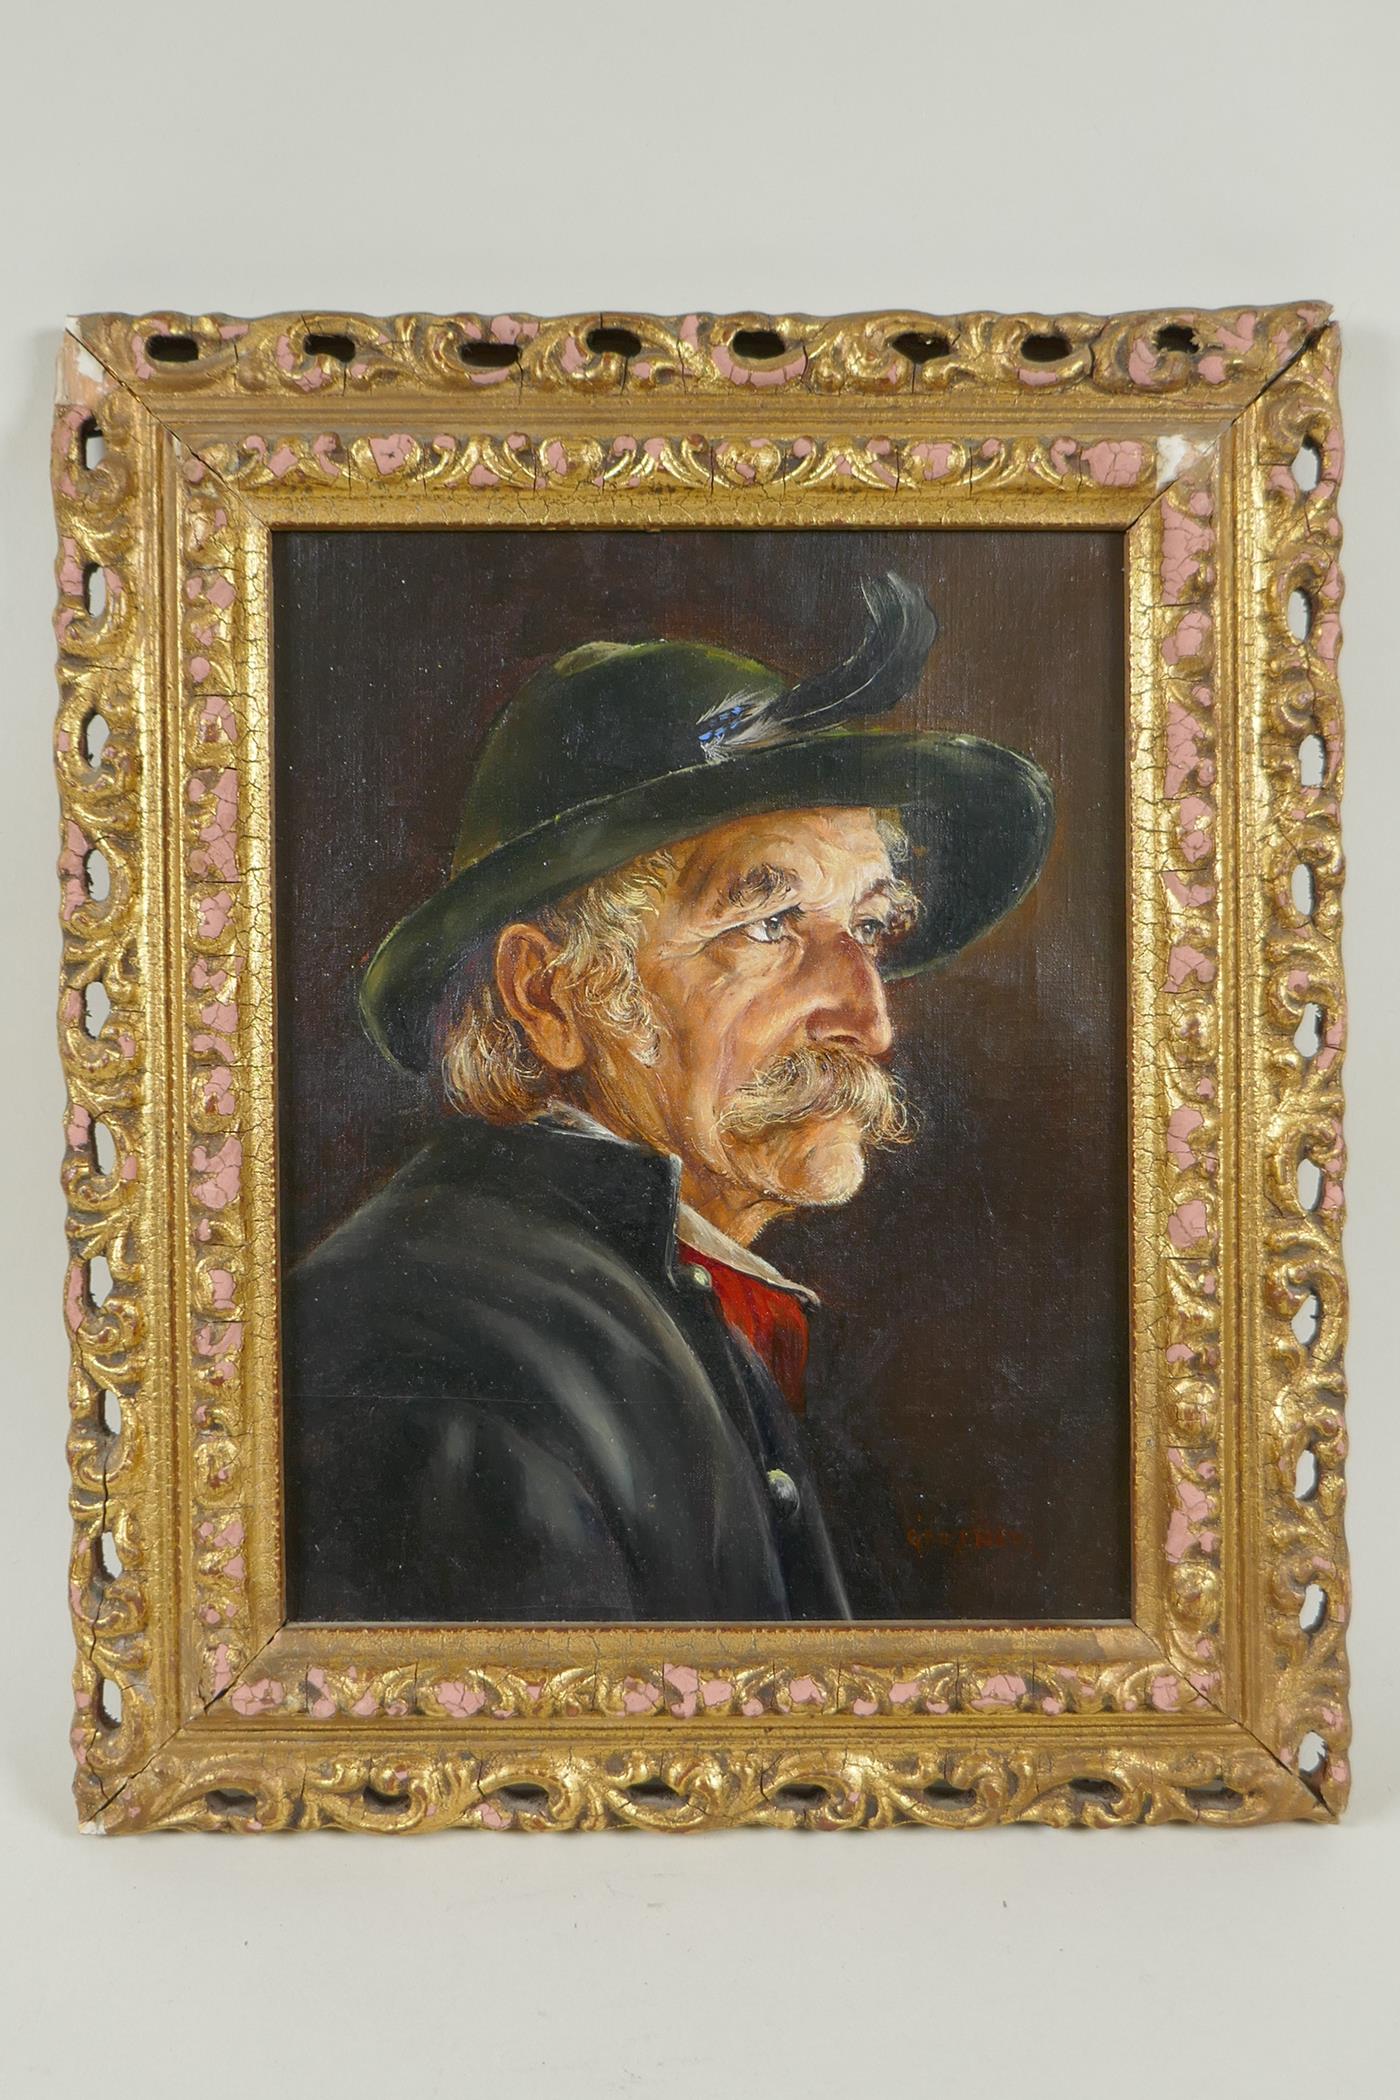 Portrait of a Tyrolean gentleman, signed Gartner, oil on canvas, 25 x 20cm - Image 2 of 4